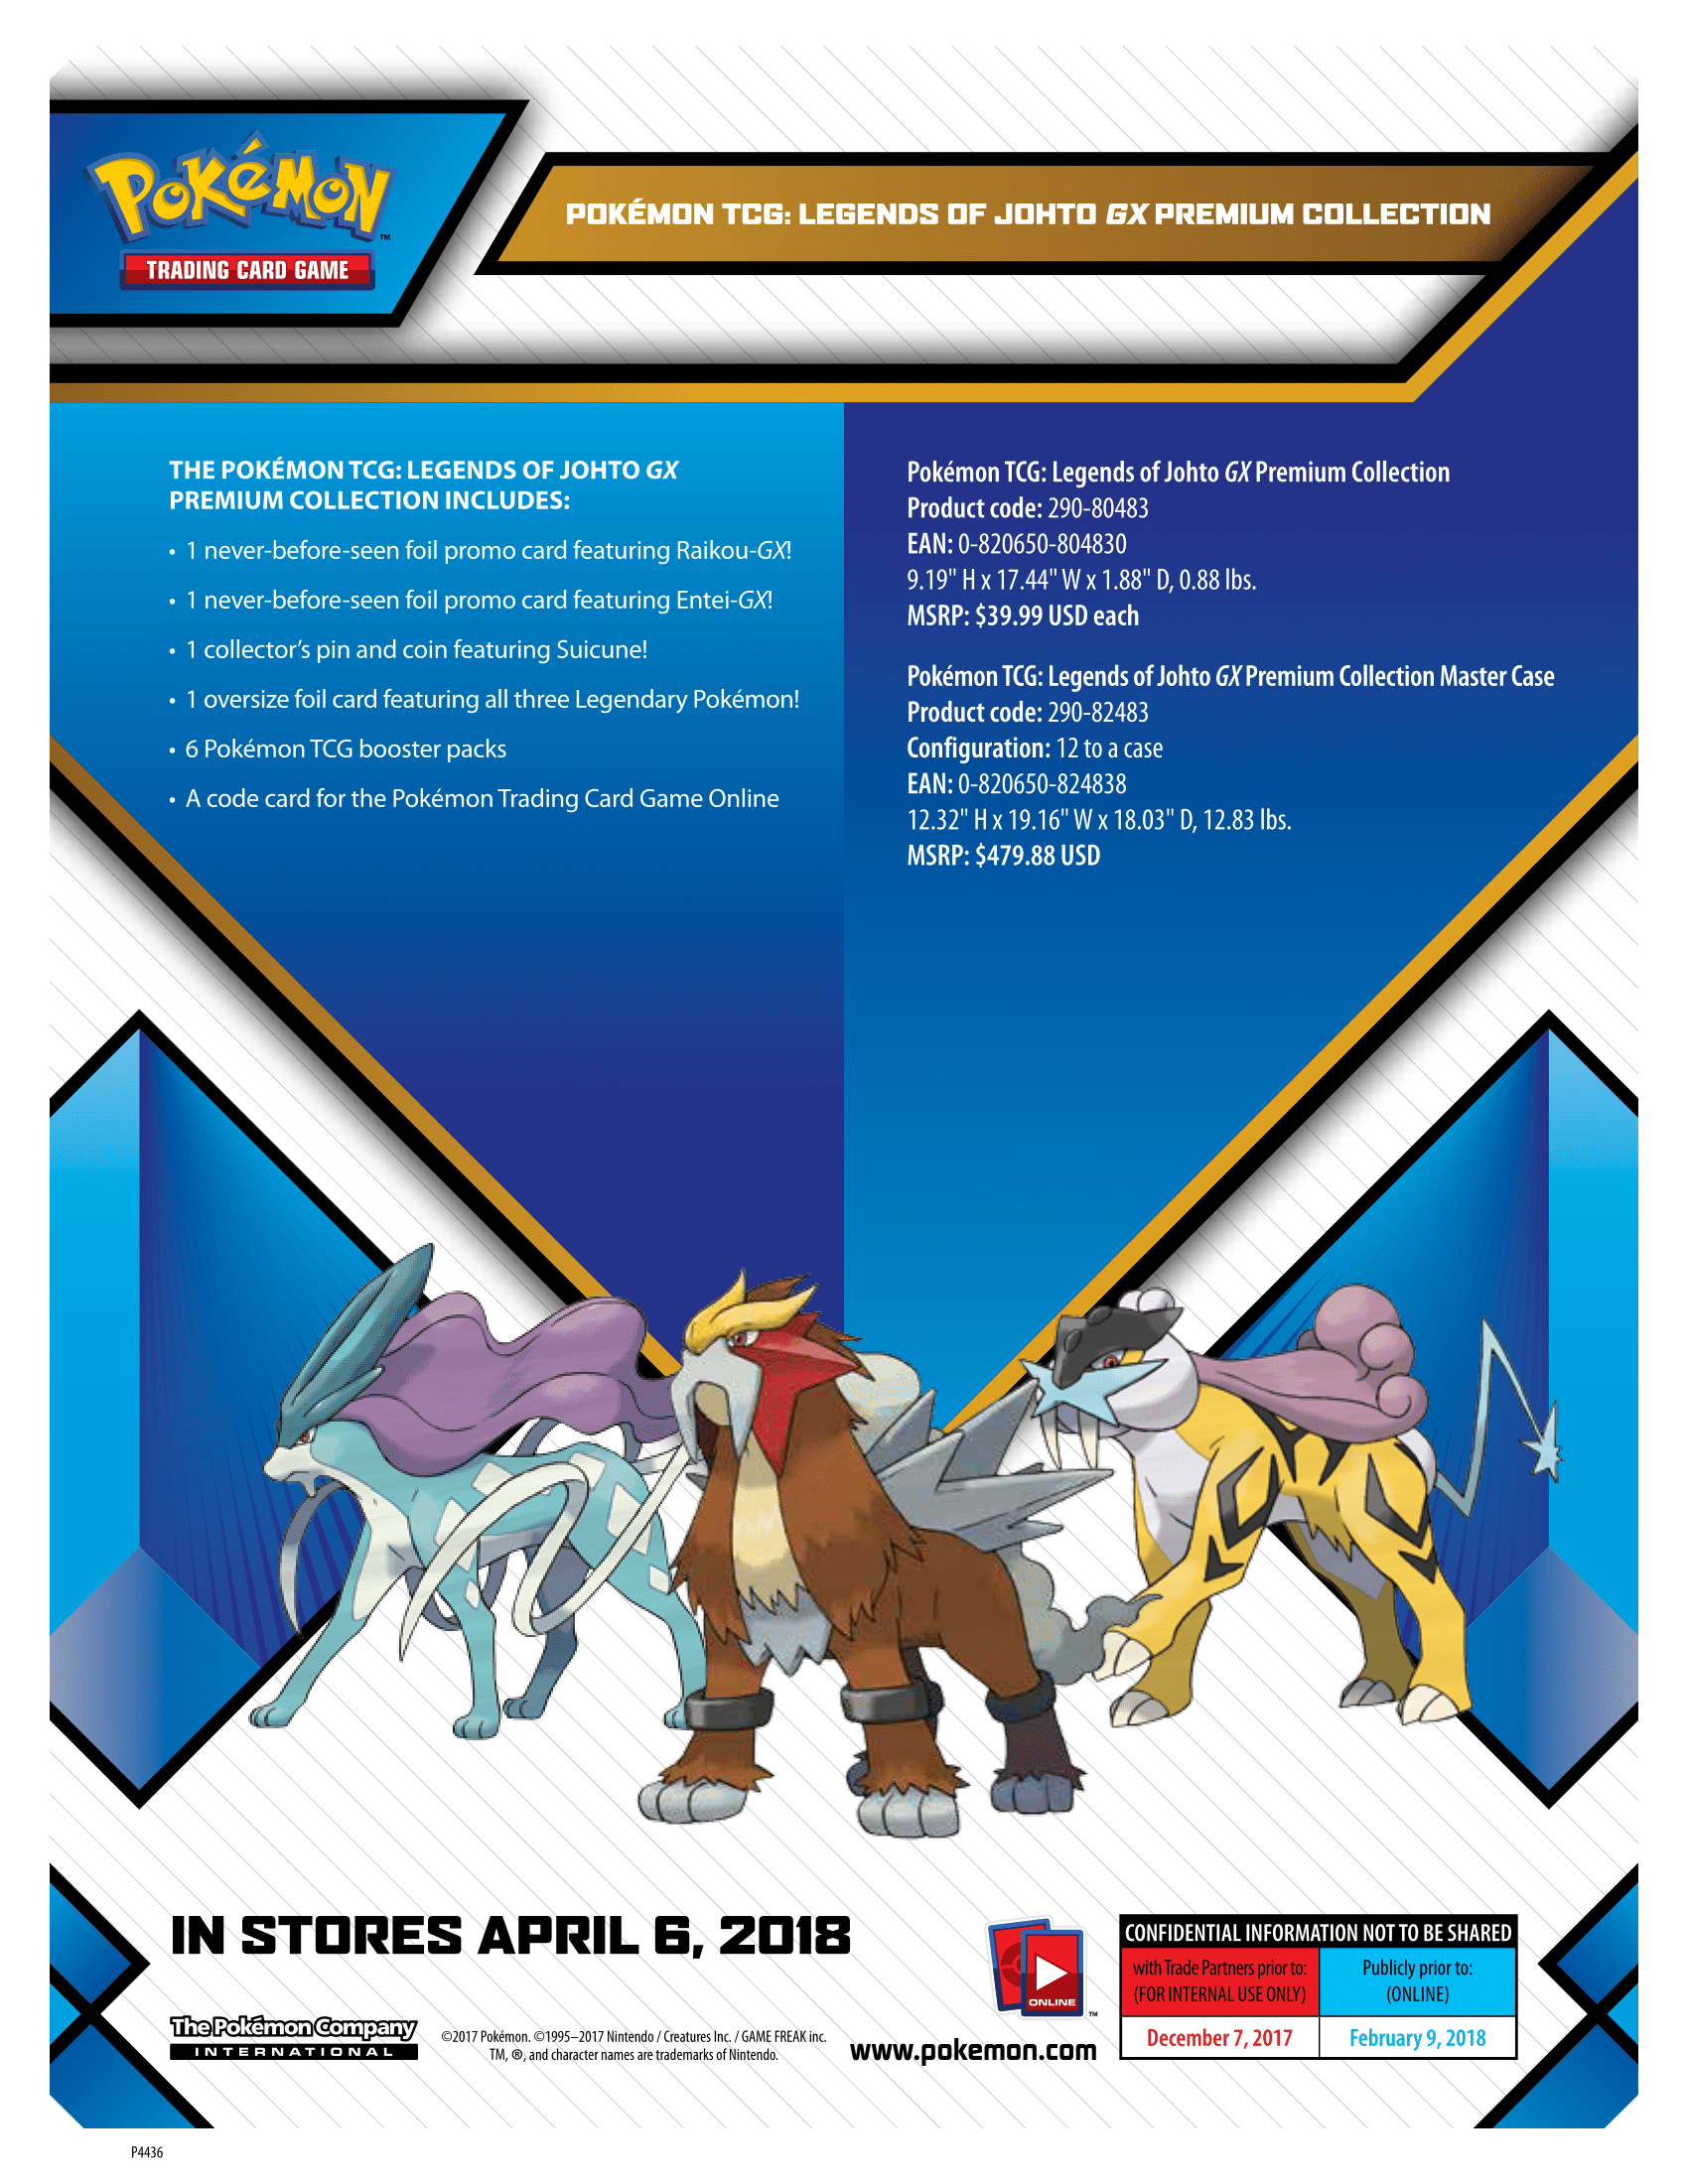 Pokémon TCG: 2 Booster Packs & Jirachi Collector's Pin